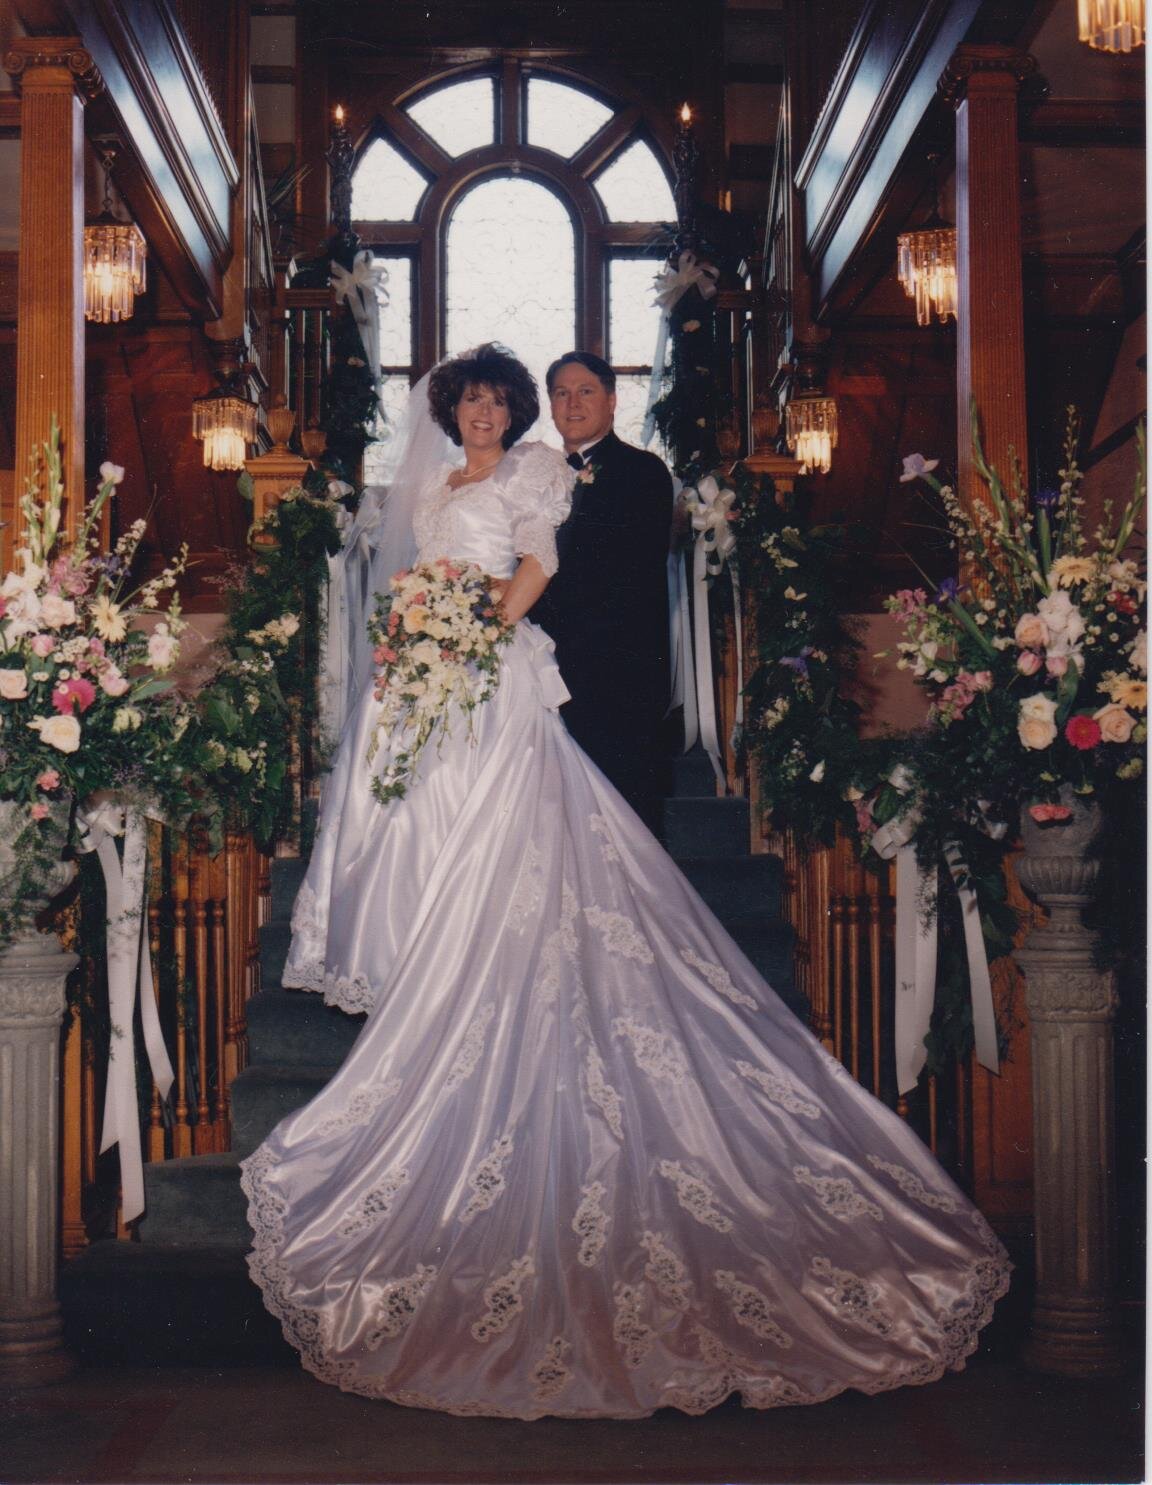 Wedding day. 1995.